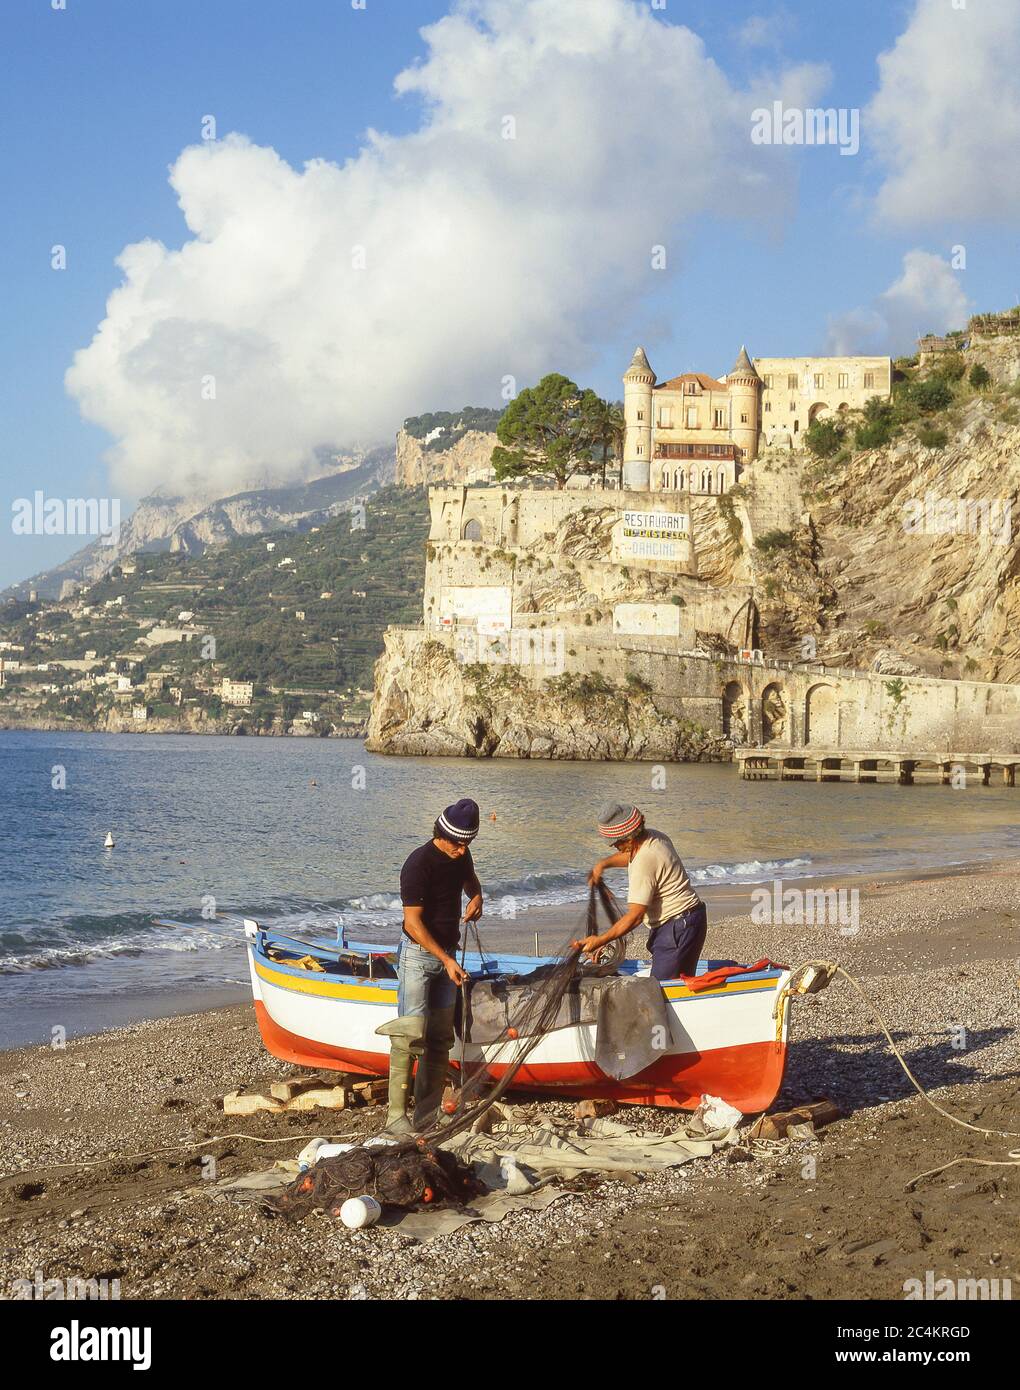 Local fishermen working on beach, Maiori, Amalfi Coast, Province of Salerno, Campania Region, Italy Stock Photo